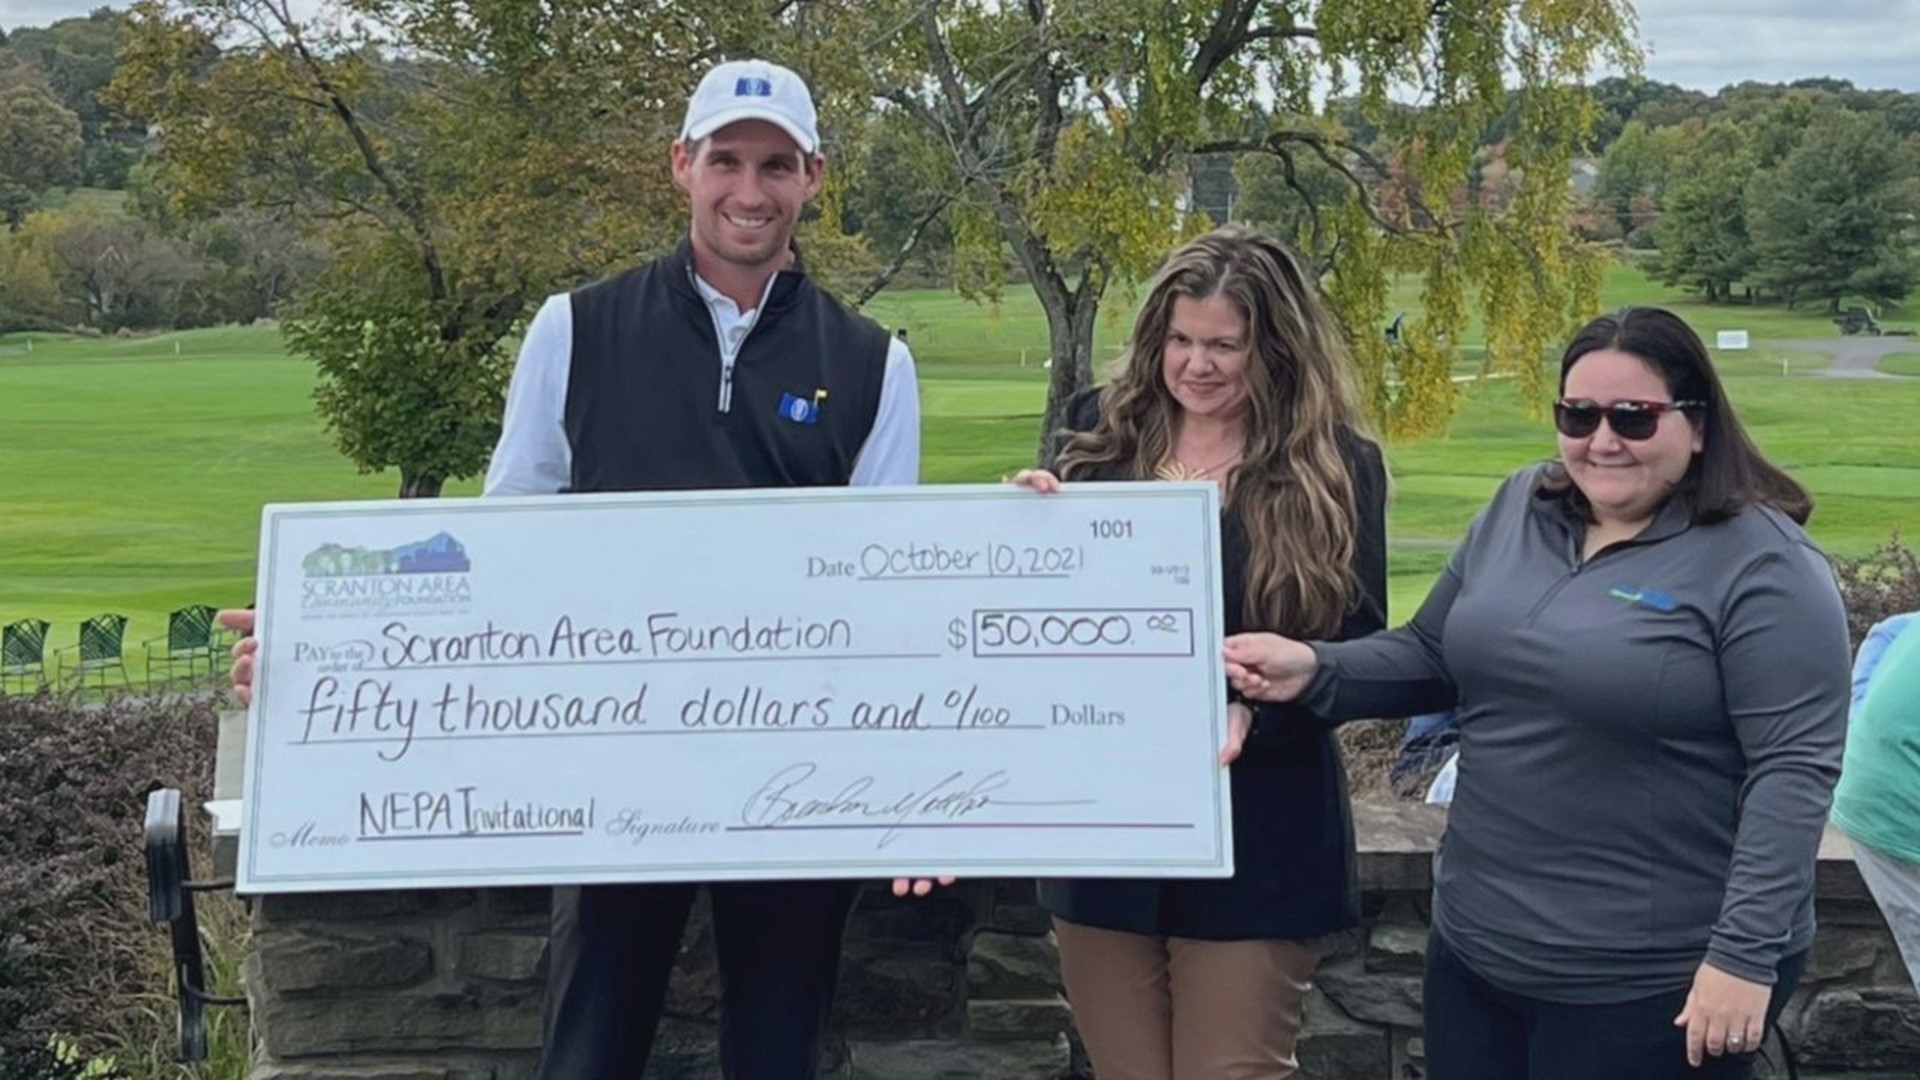 Brandon Matthews Hold Golf Tournament Benefiting Local Junior Golf, Scranton Area Foundation